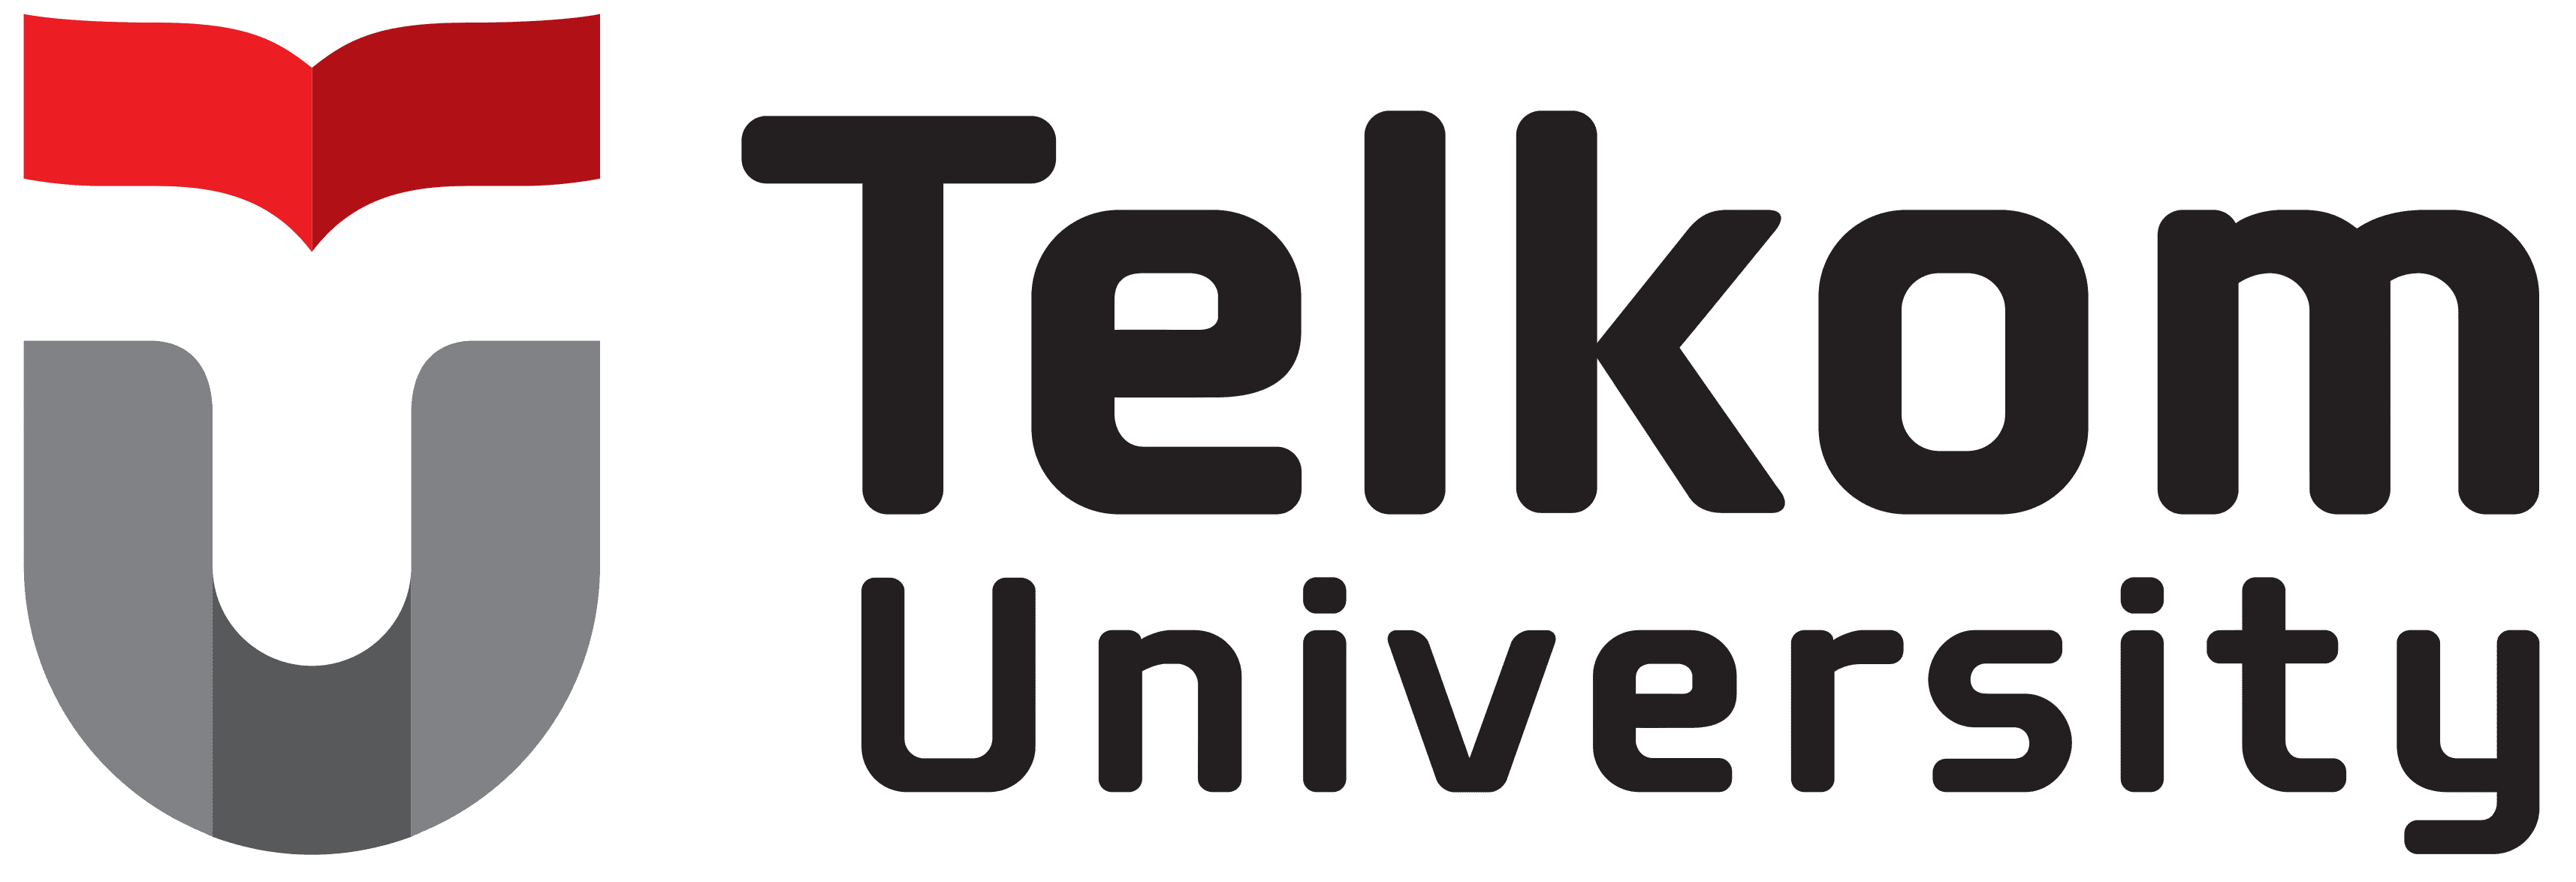 Telkom University The Best Private Universities in Indonesia